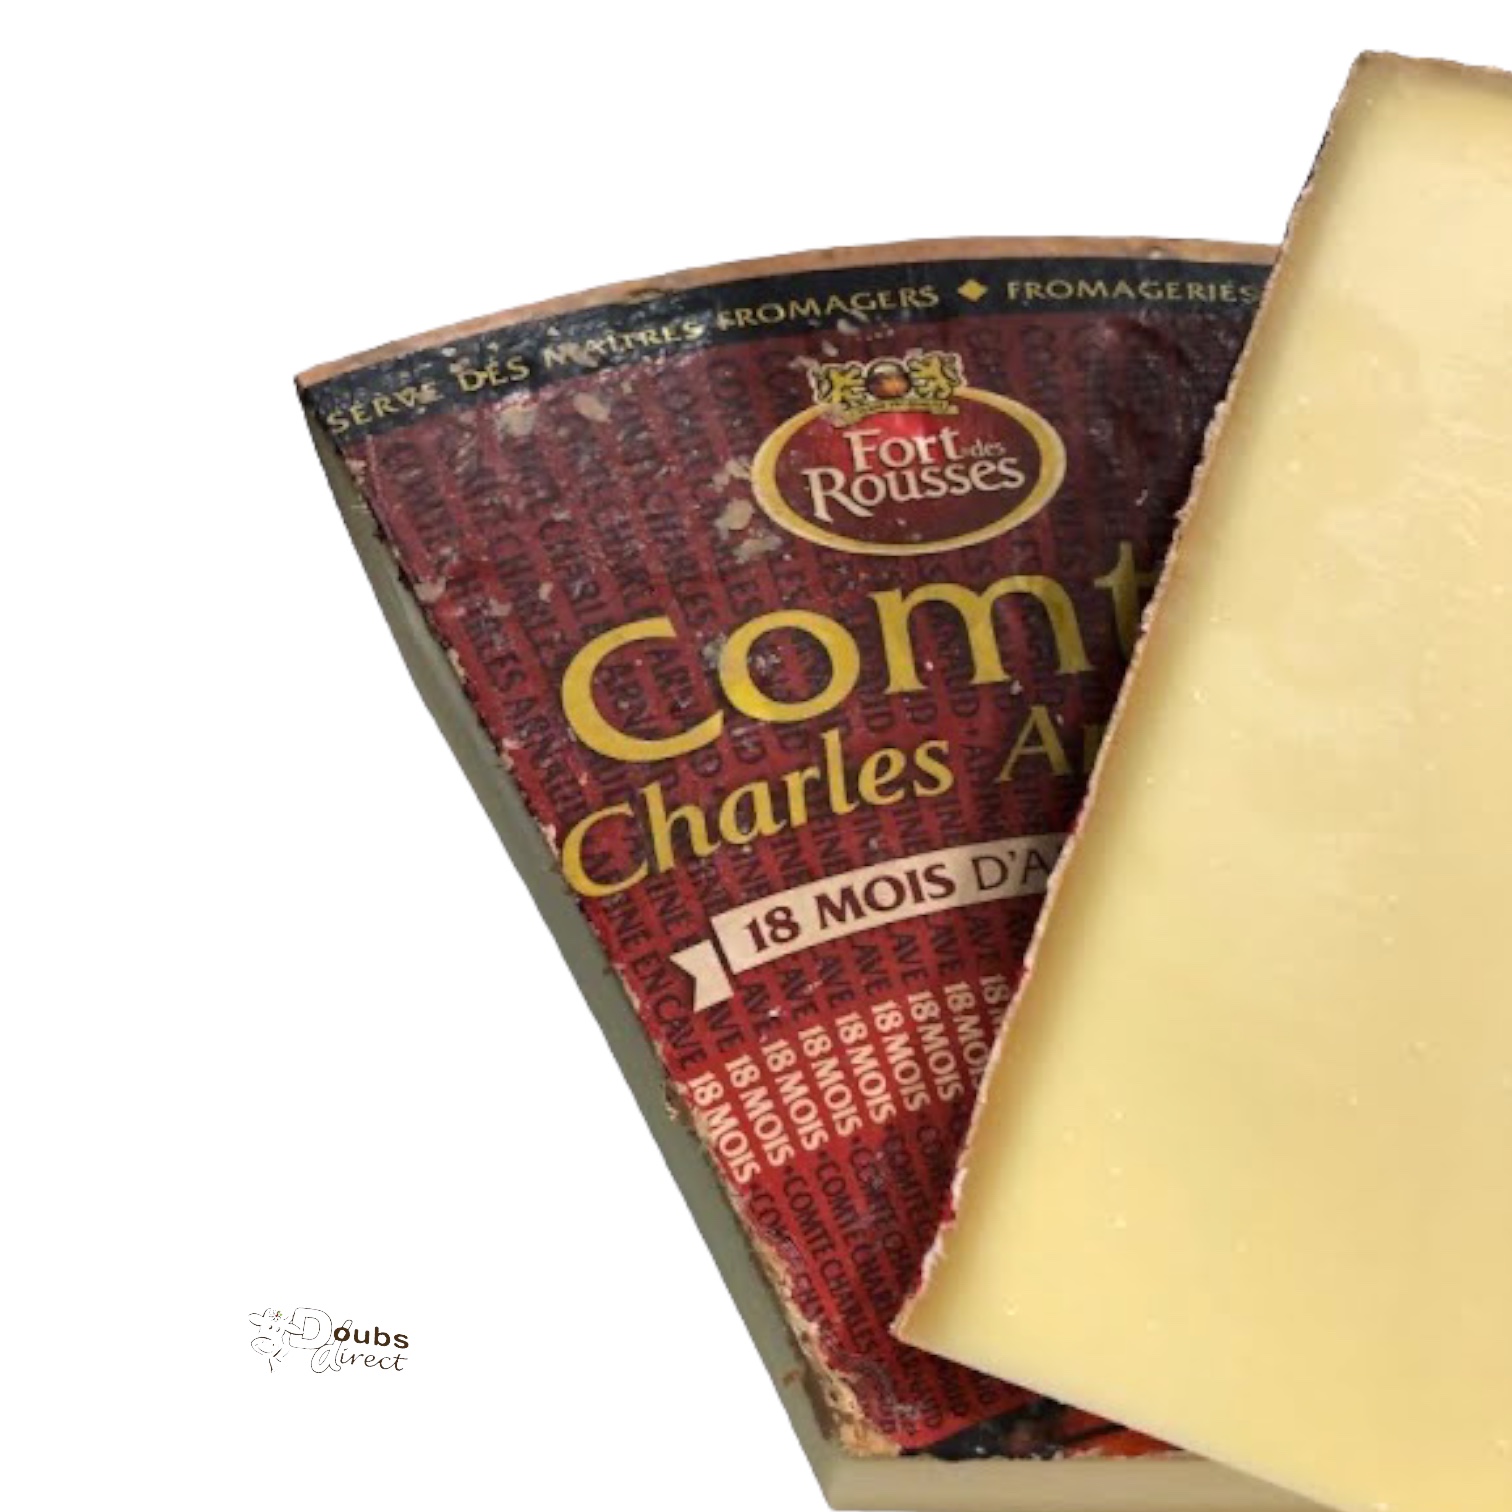 18 mois charles arnaud meilleur fromage du monde